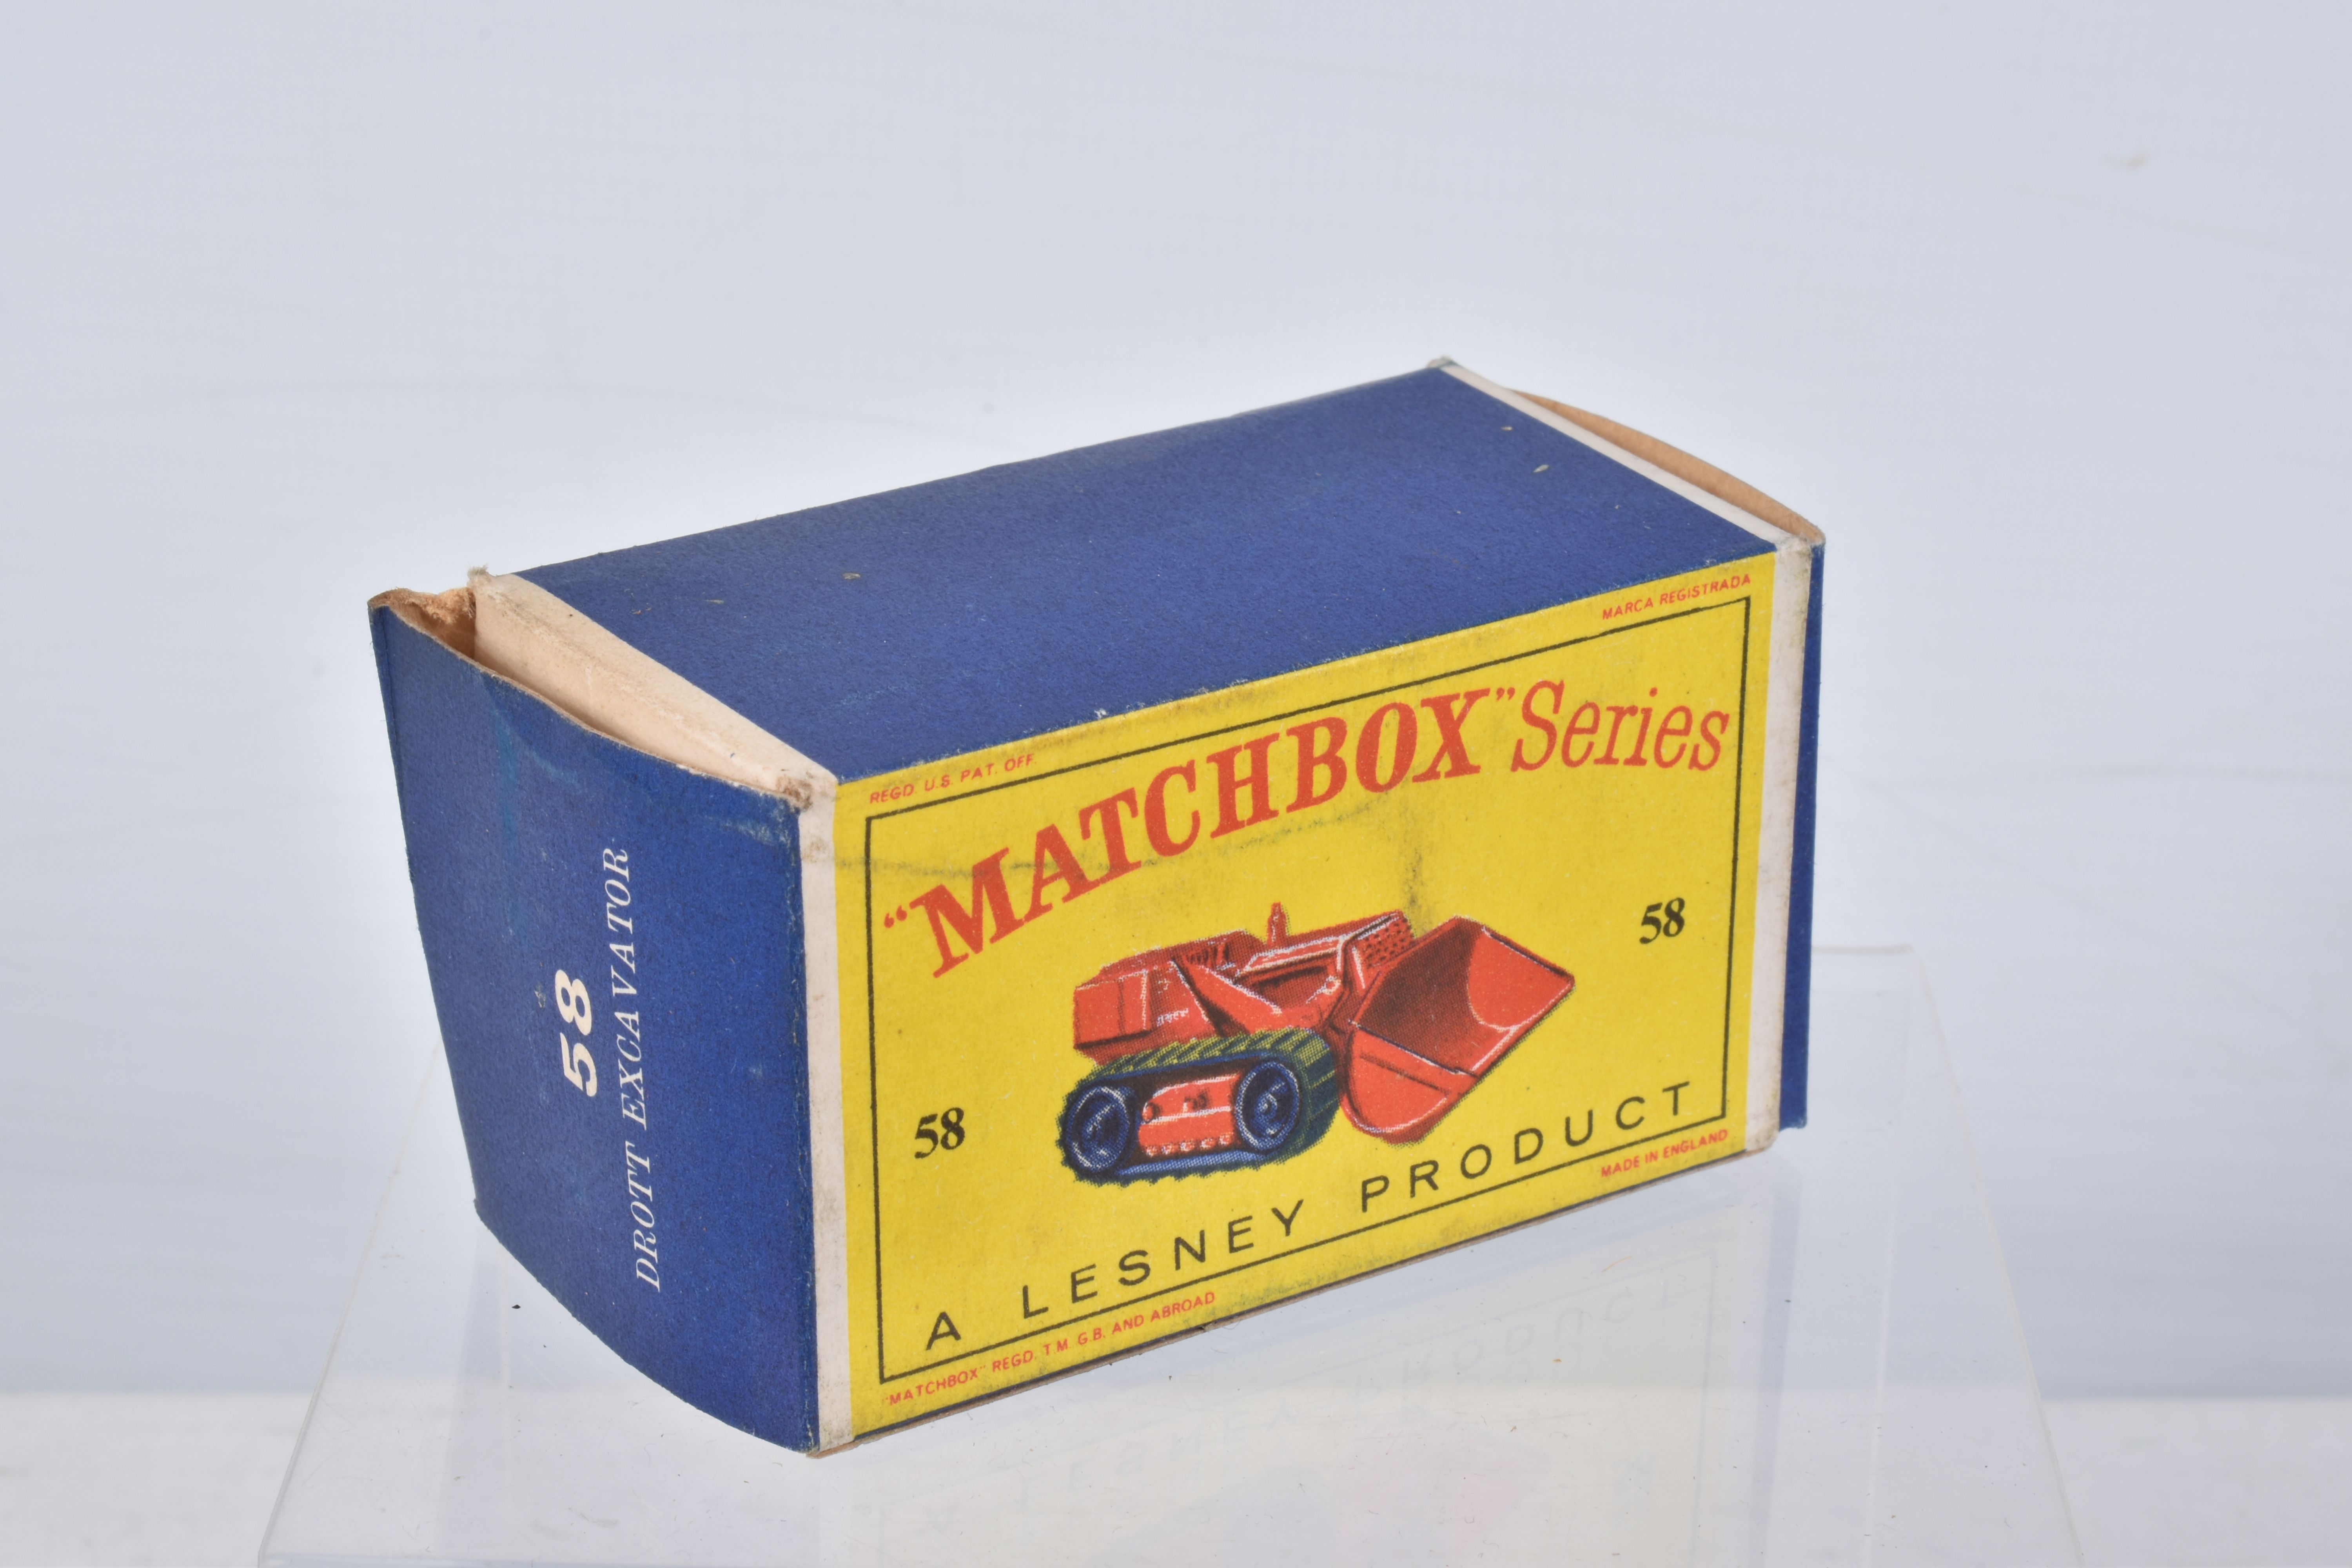 FOUR BOXED MATCHBOX SERIES DIECAST CONSTRUCTION VEHICLES, Caterpillar Bulldozer, No.18, green - Image 21 of 25